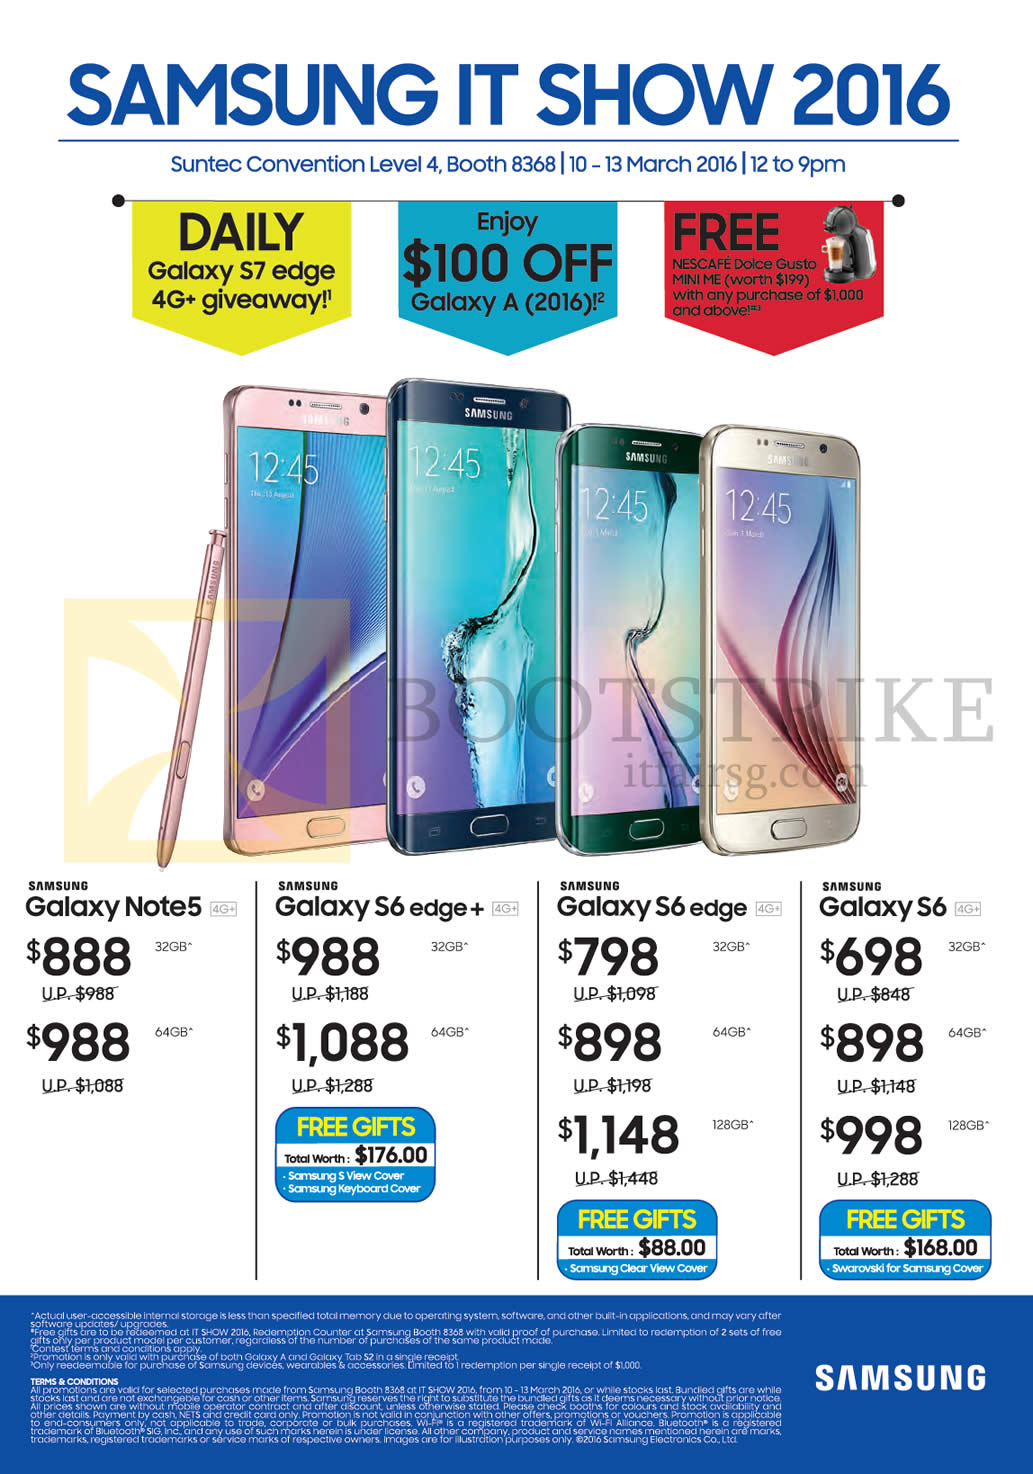 IT SHOW 2016 price list image brochure of Samsung Smartphones Galaxy Note 4 4G, Edge Plus, S6 Edge, S6